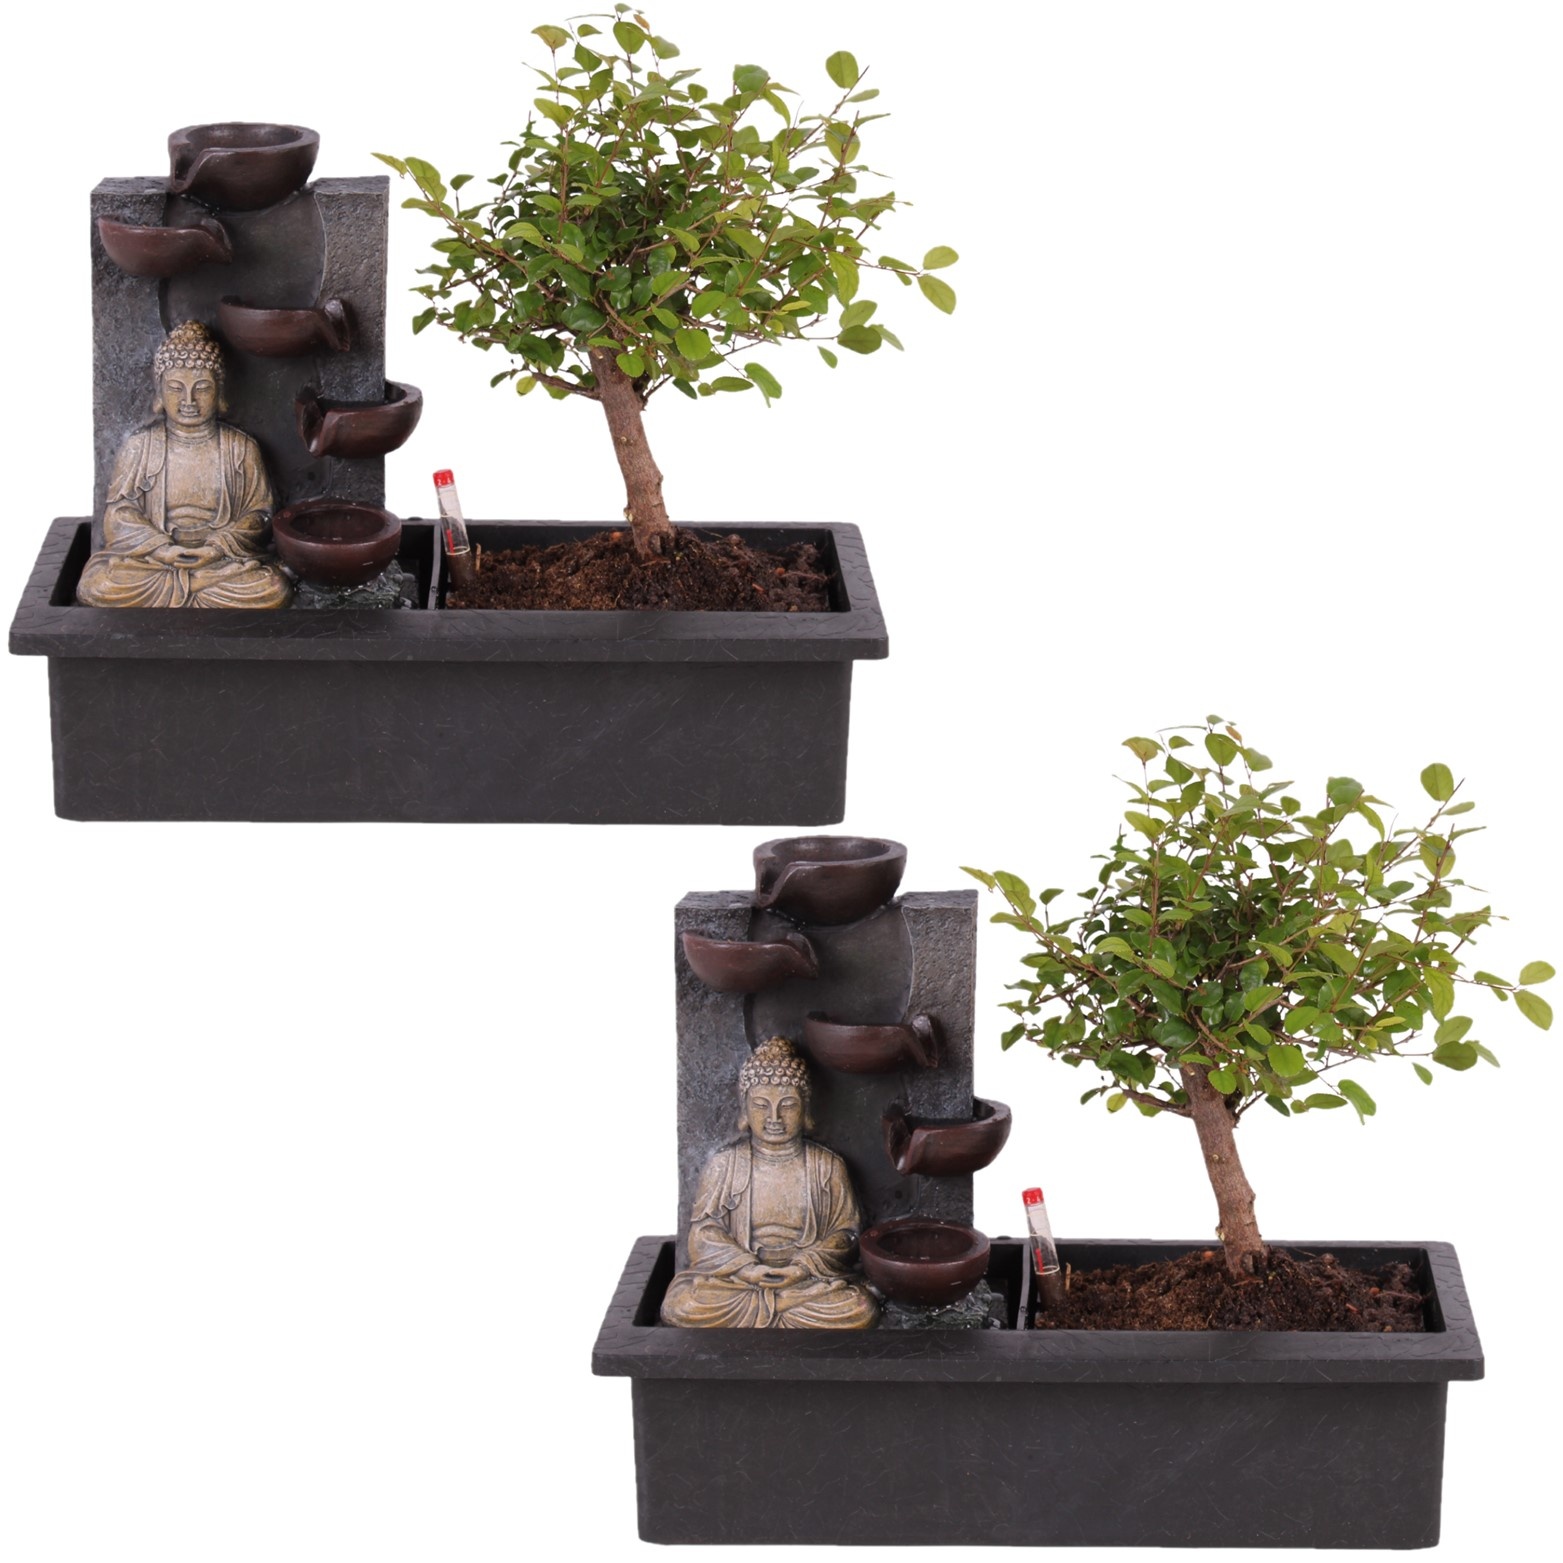 DEWINNER Kit bonsai per albero bonsai, Set di Attrezzi da Giardino